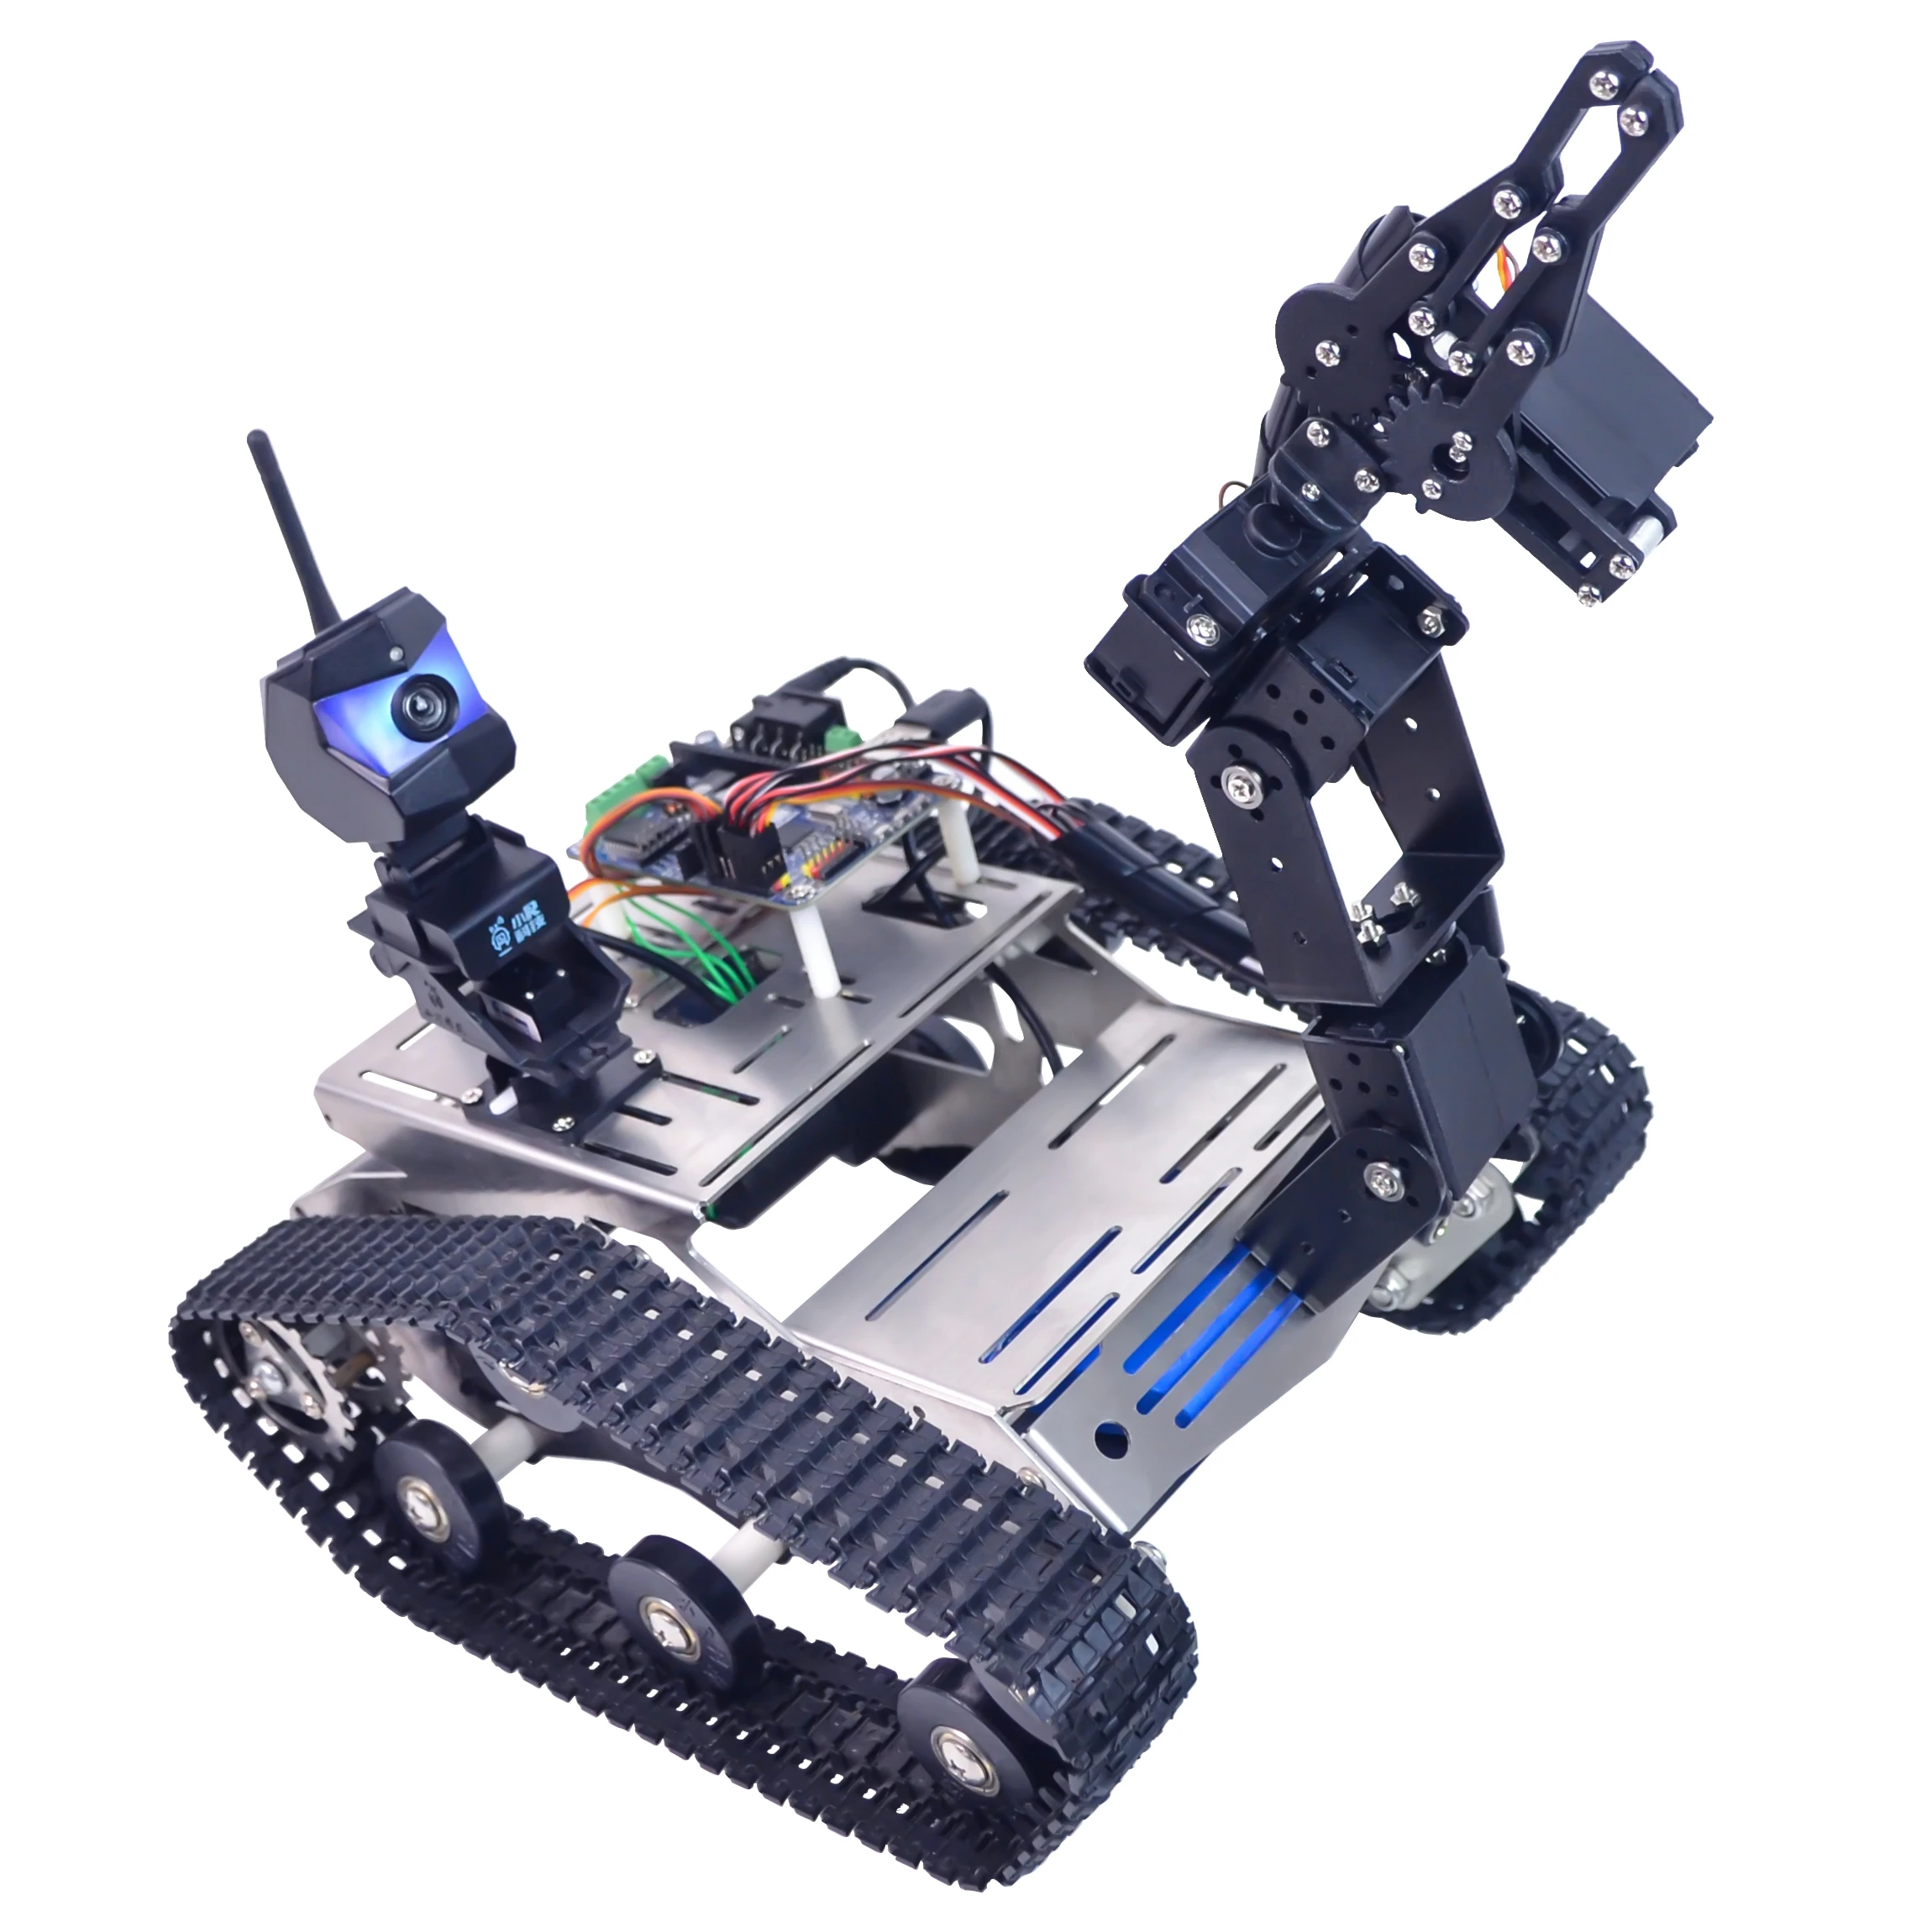 XiaoR Geek Hot sale TH Toy Robot Tank Car DIY wireless WIFI smart robot car with AR DUINO 2560 style robot car